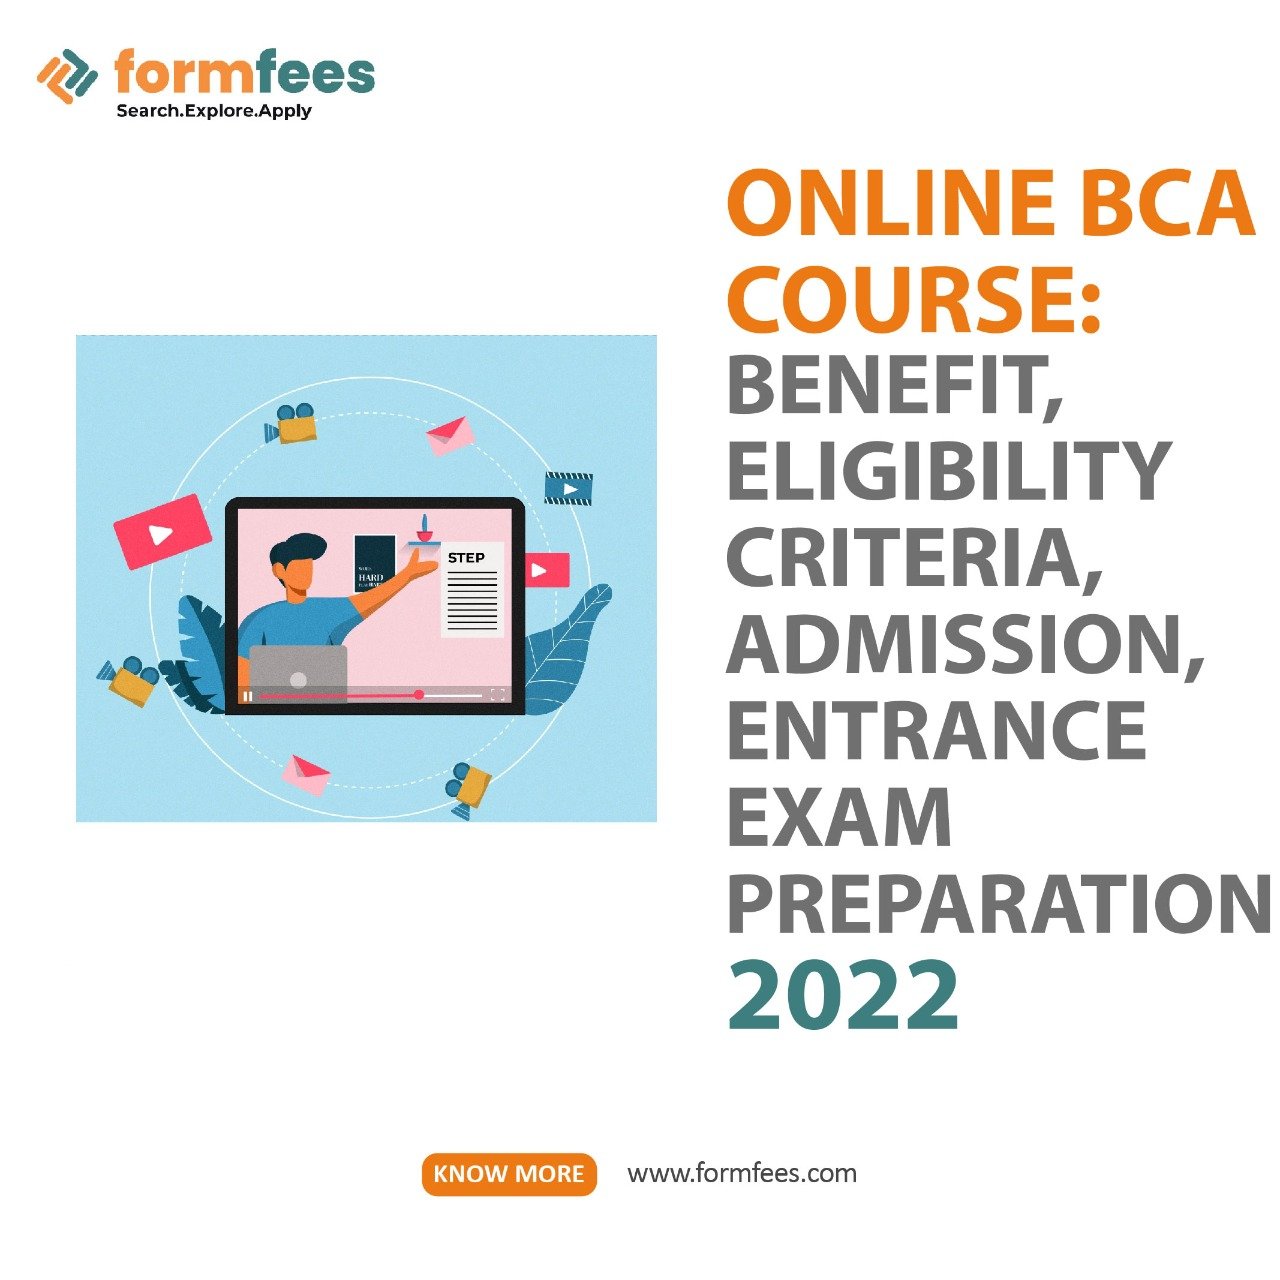 Online BCA Course: Benefits, Eligibility Criteria, Admission, Entrance Exam Preparation 2022